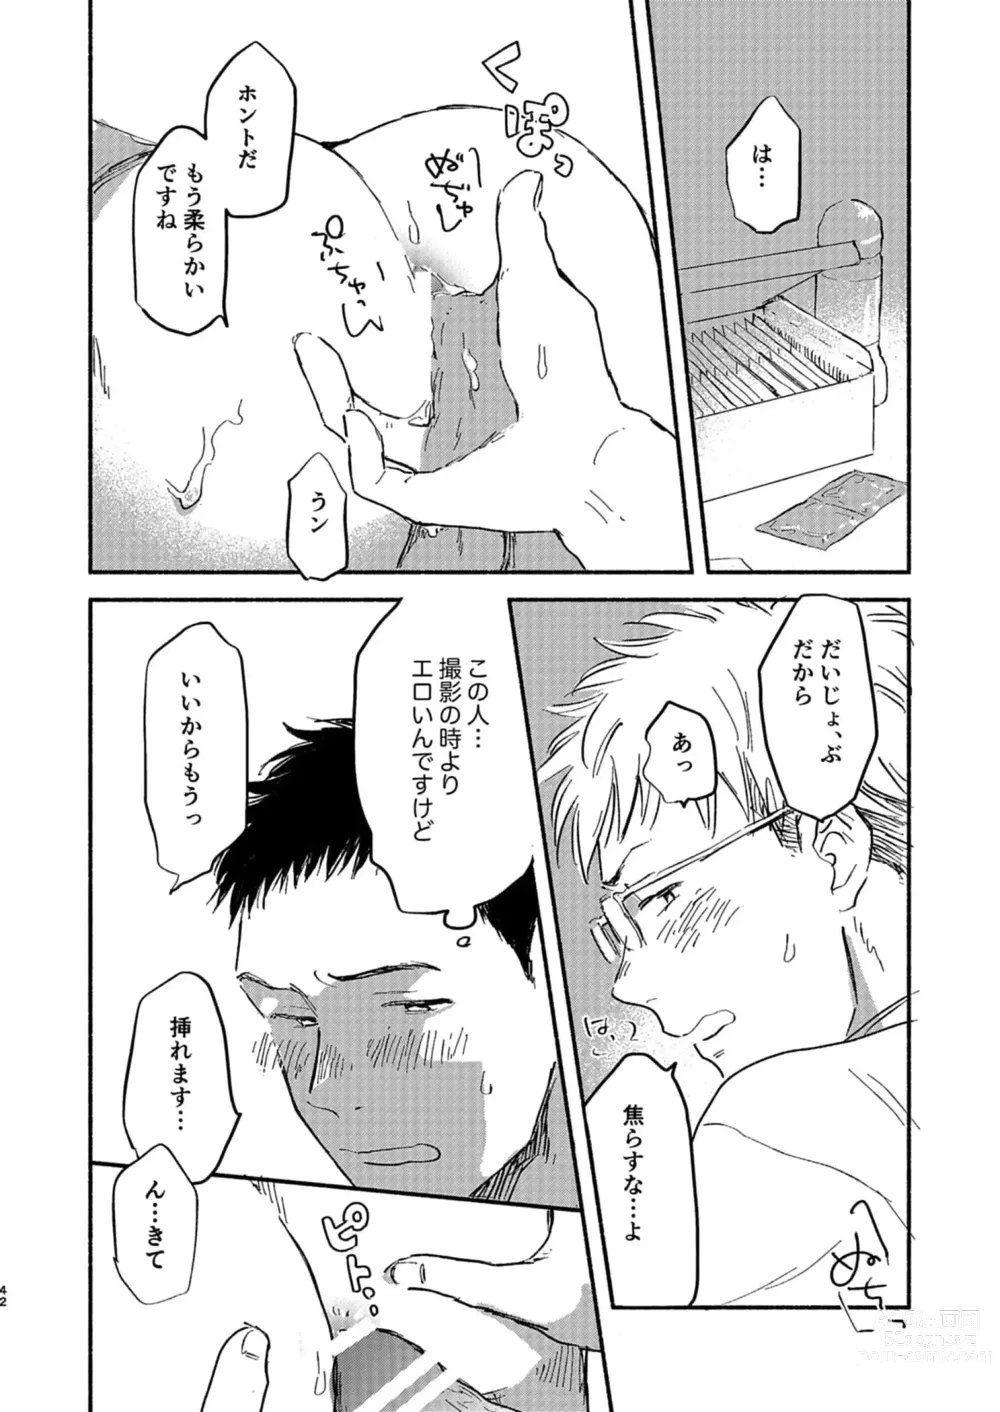 Page 42 of doujinshi Toaru GayVi Seisaku Gaisha Staff no Shanai Renai Jijou - The internal love affairs of the staff of a certain gay video production company.